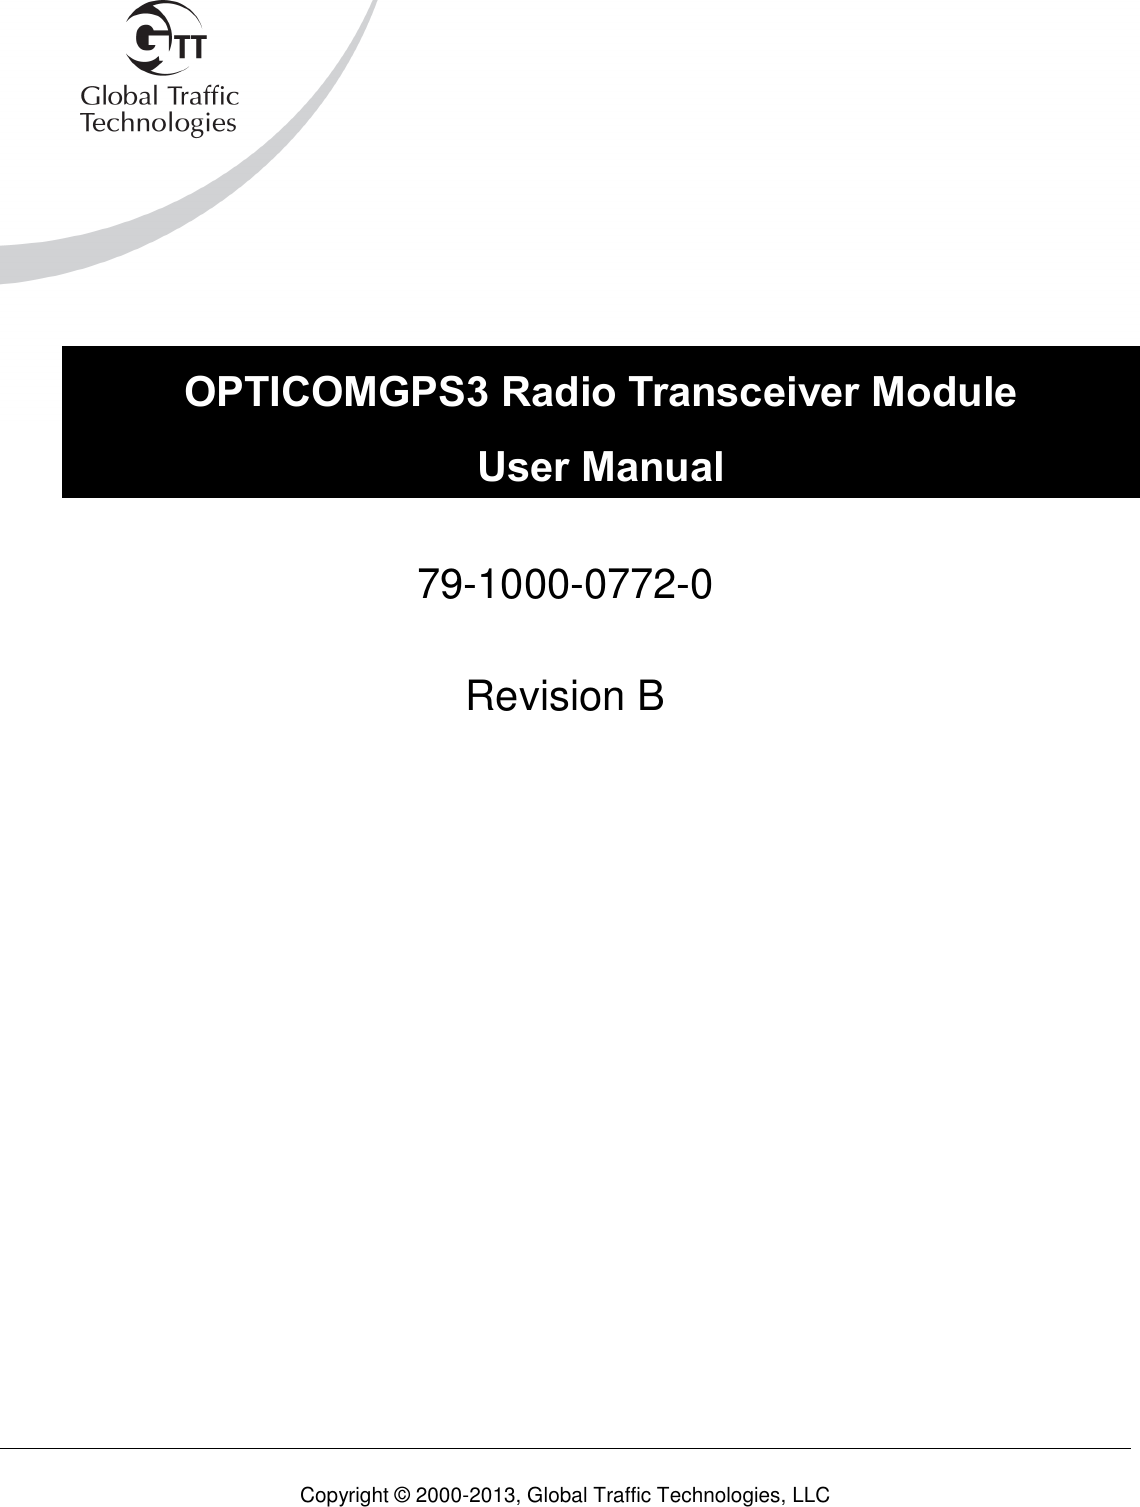   Copyright © 2000-2013, Global Traffic Technologies, LLC        79-1000-0772-0  Revision B                   OPTICOMGPS3 Radio Transceiver Module User Manual 